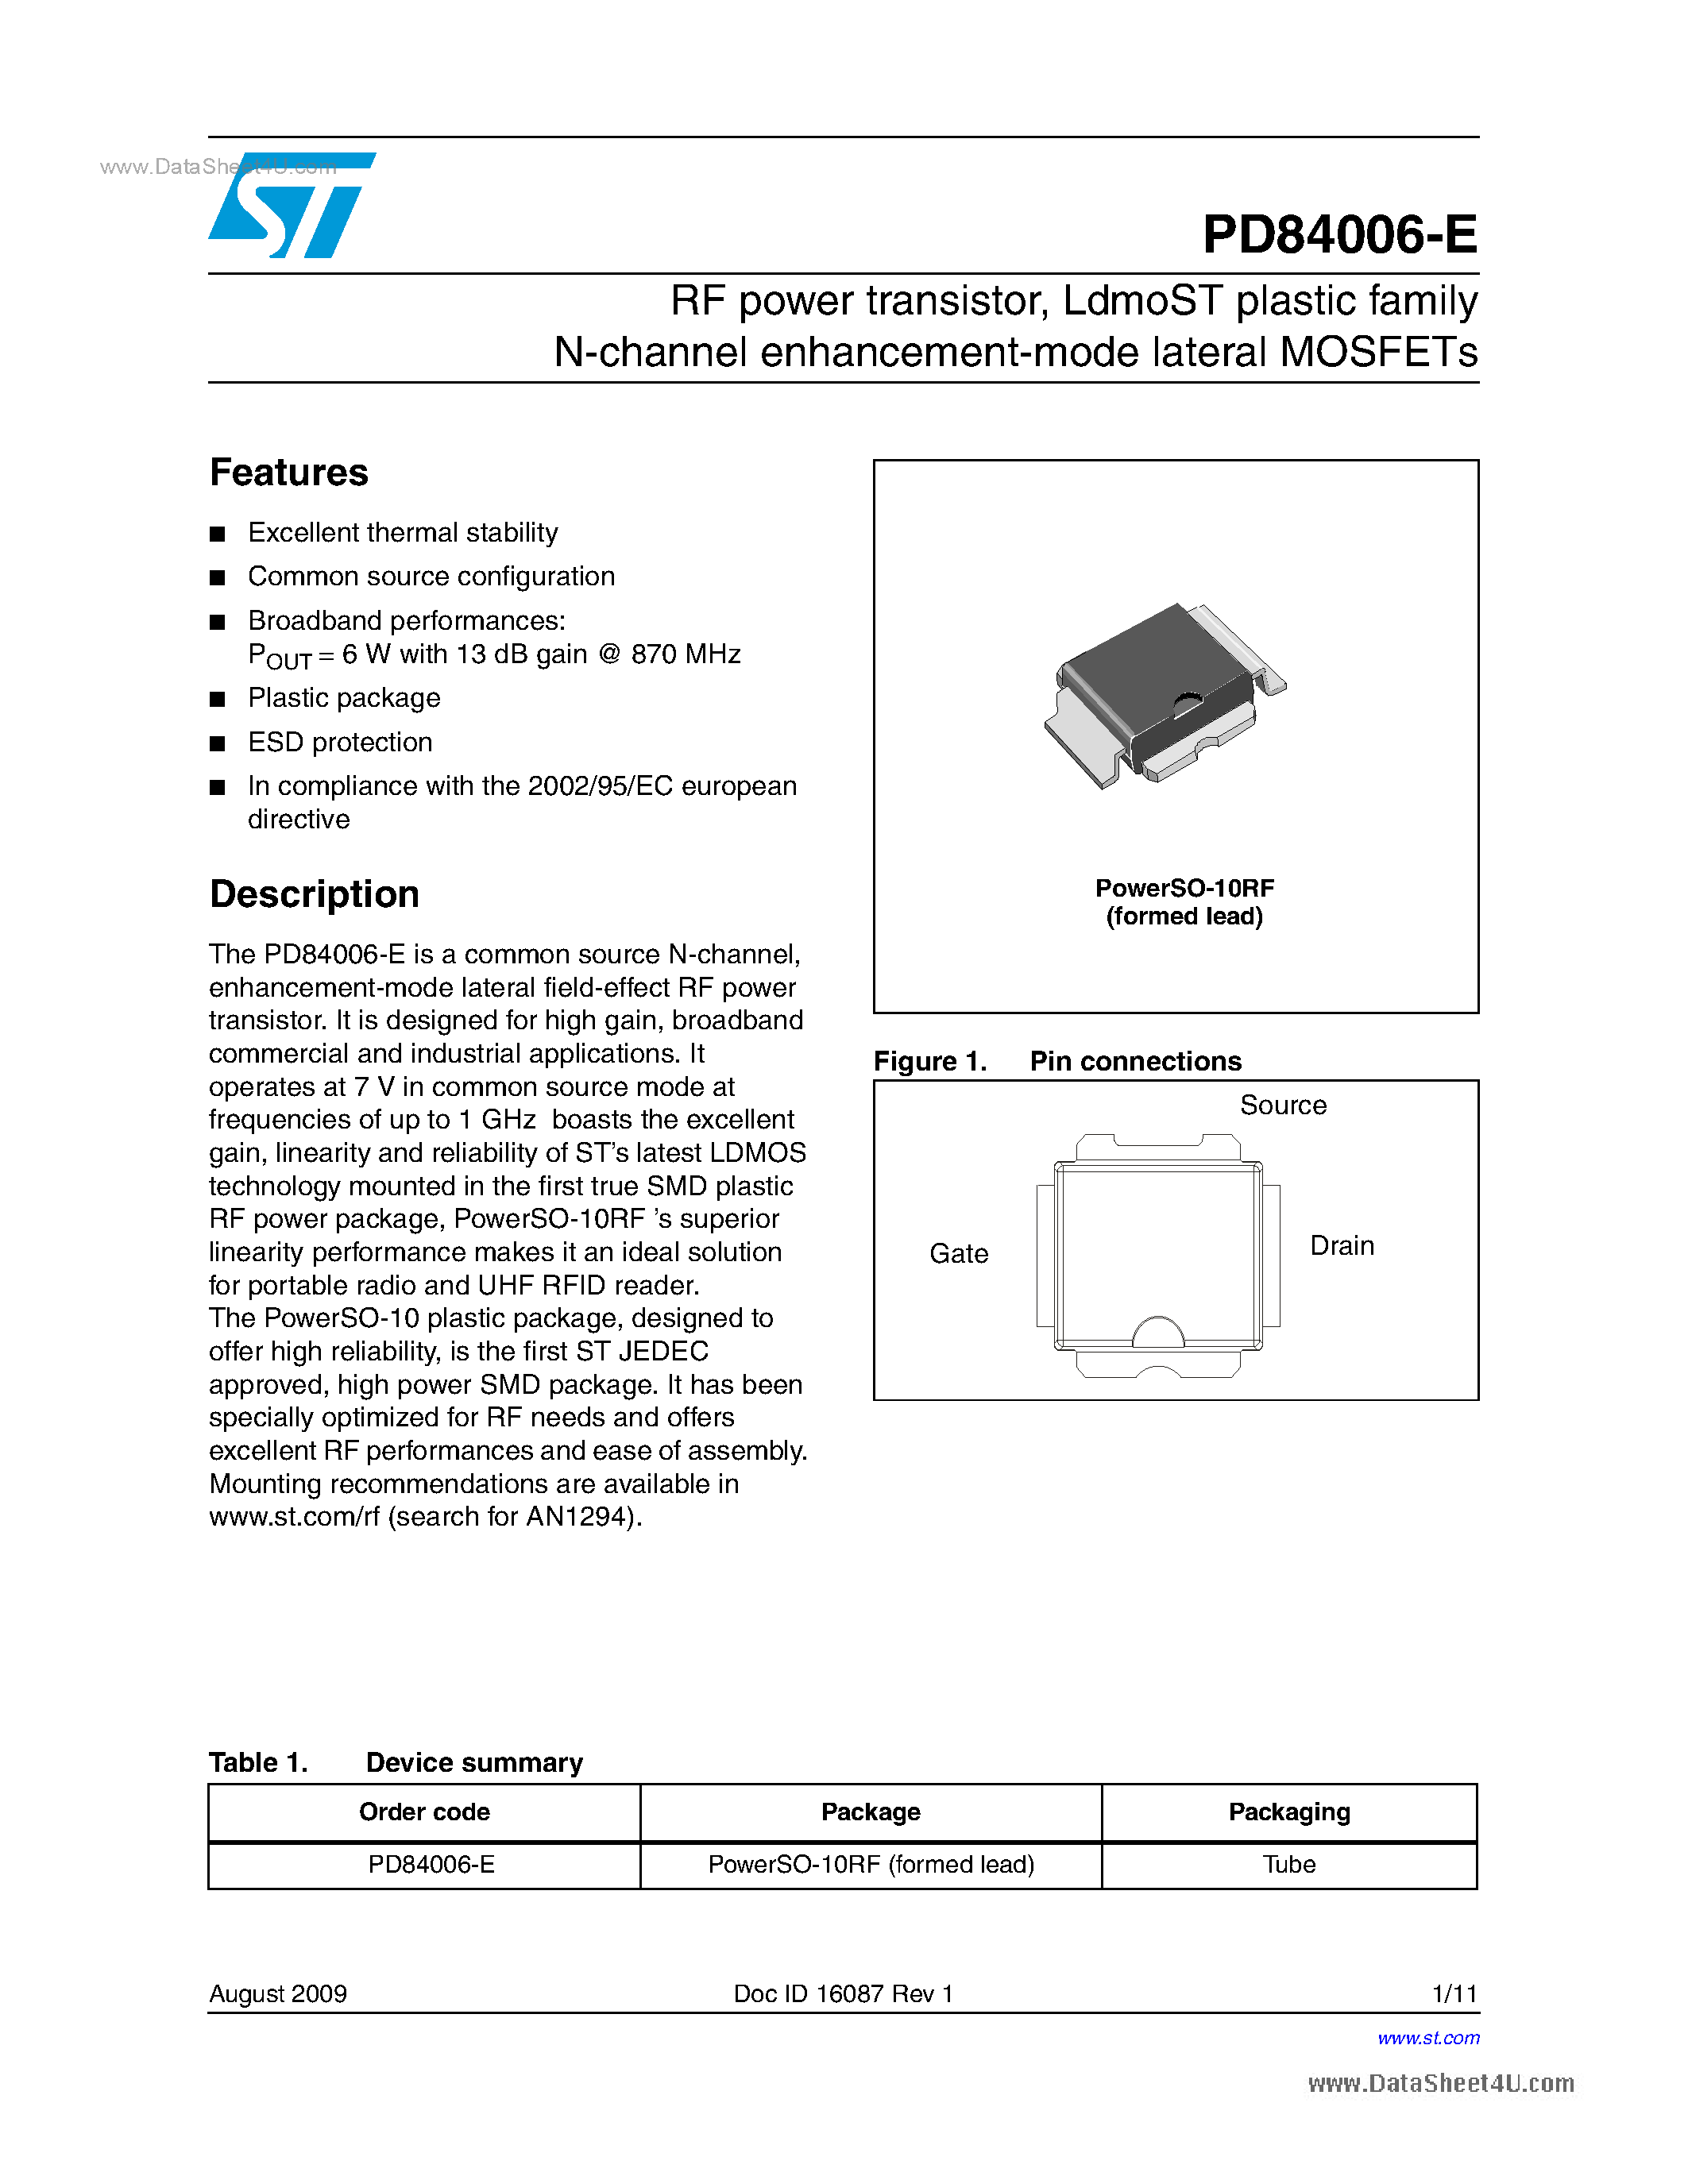 Datasheet PD84006-E - RF Power Transistor page 1